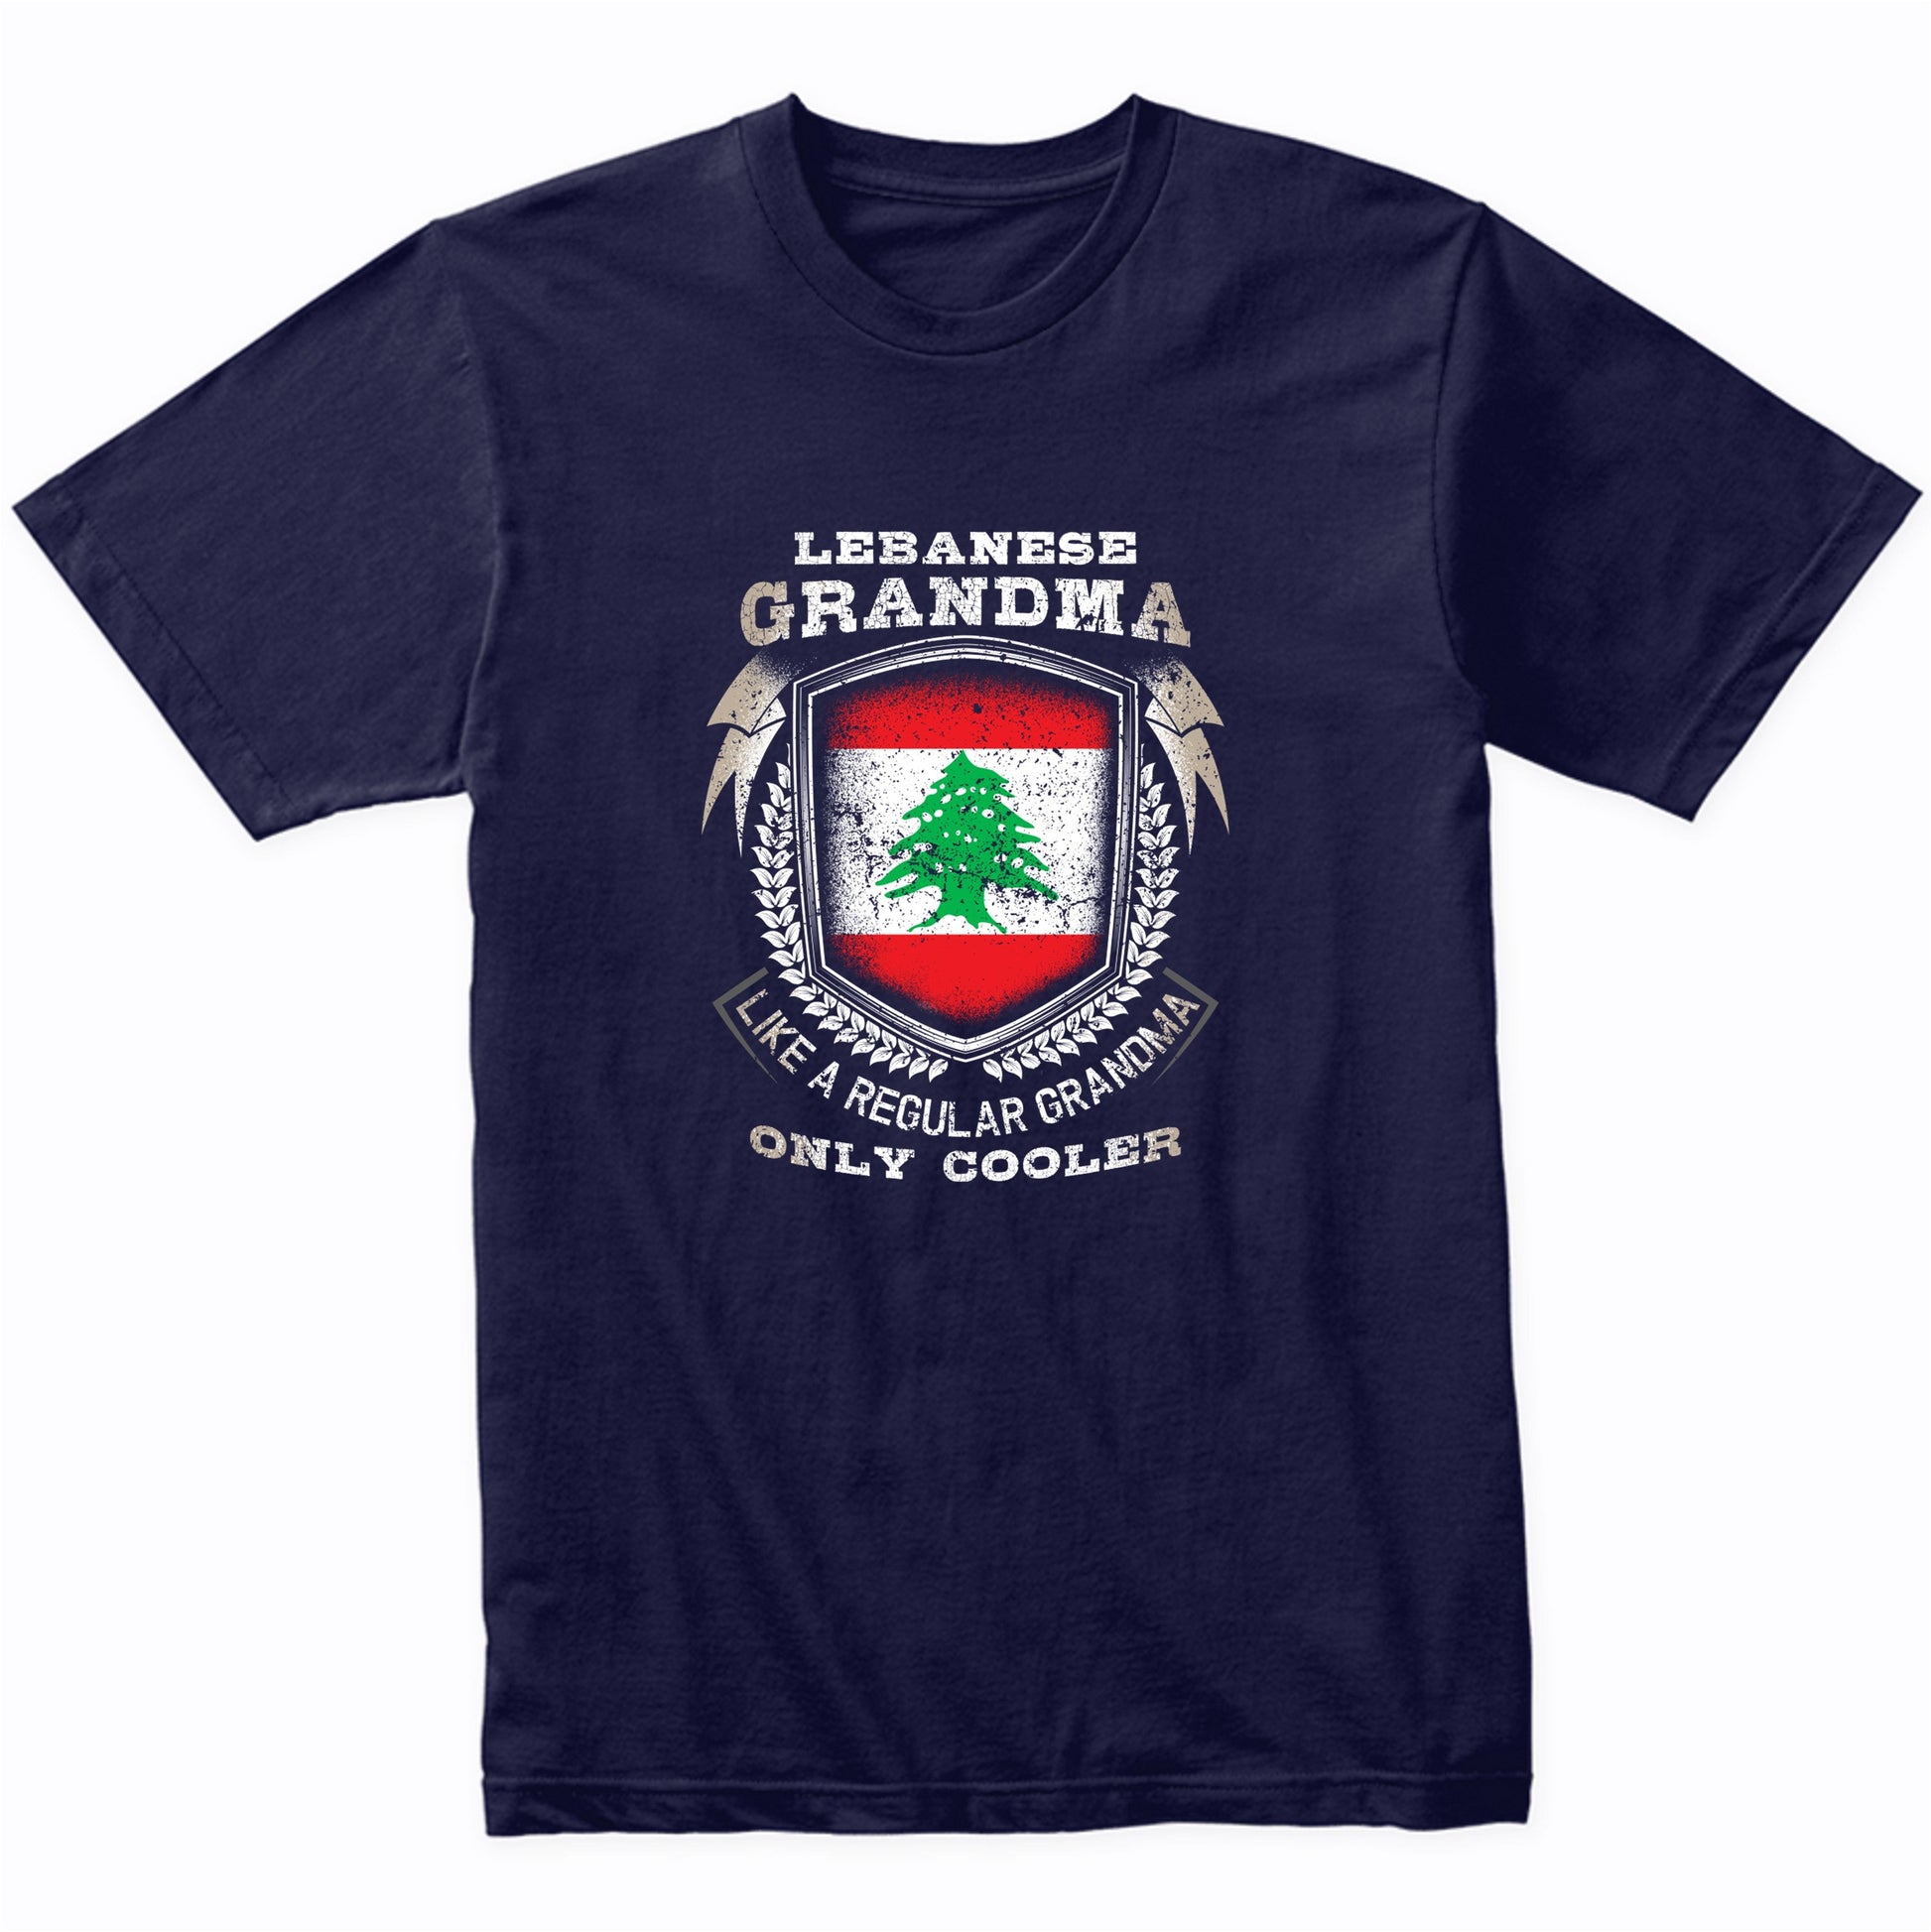 Lebanese Grandma Like A Regular Grandma Only Cooler Funny T-Shirt